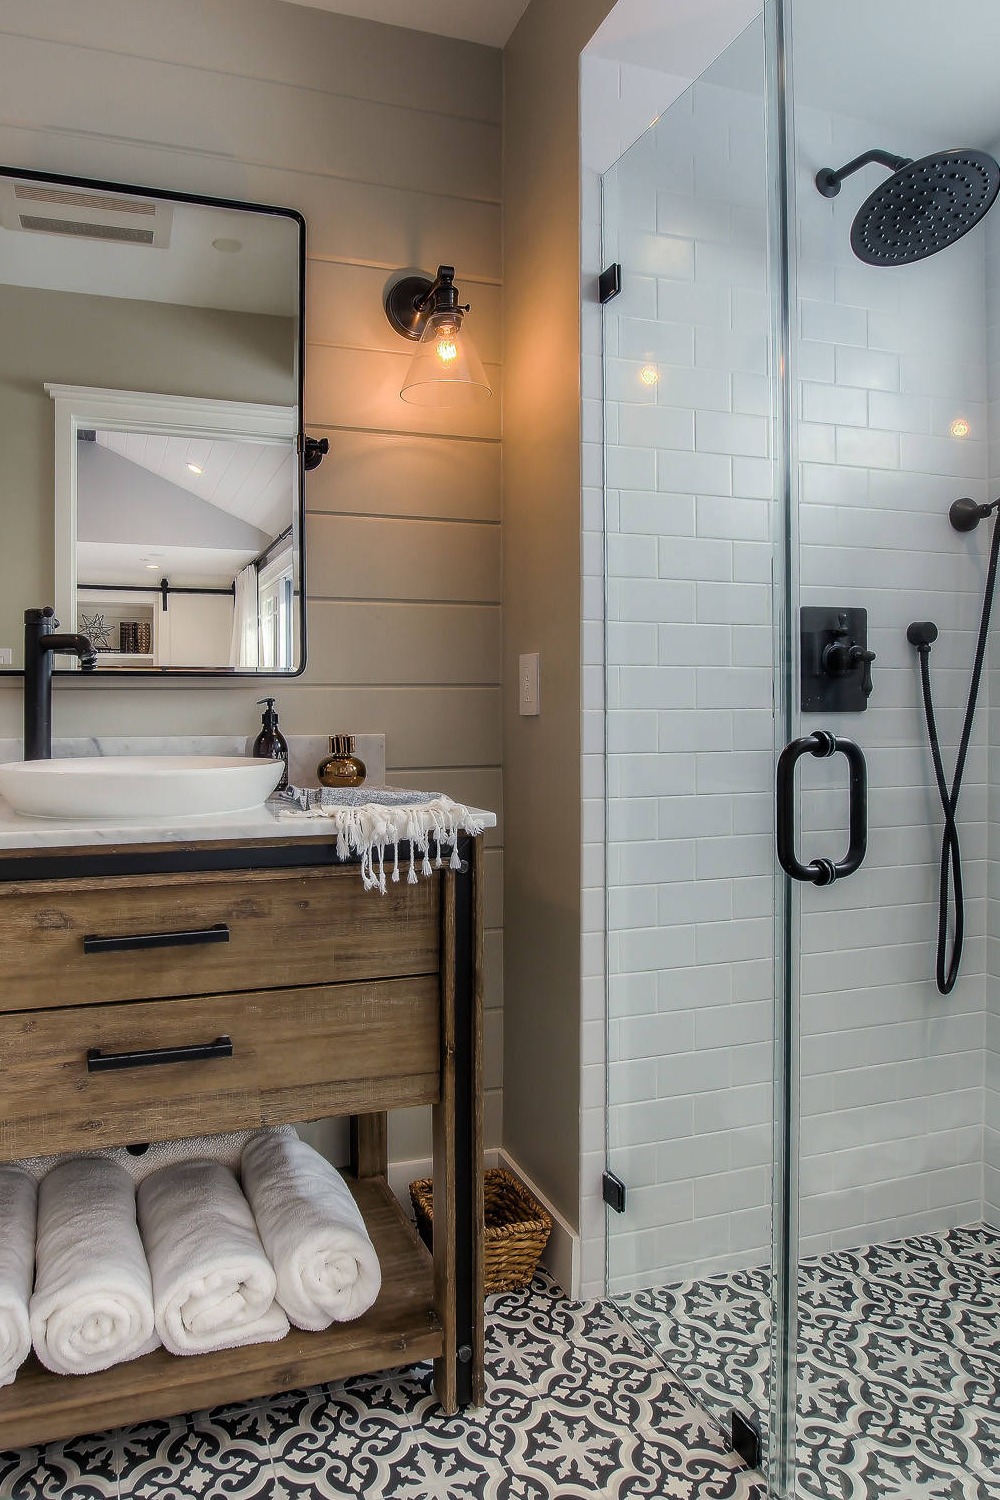 Vanity Bathtub Bathroom Remodel Bathroom Design Re Bath Tub Shower Toilet Sink Tile Wall